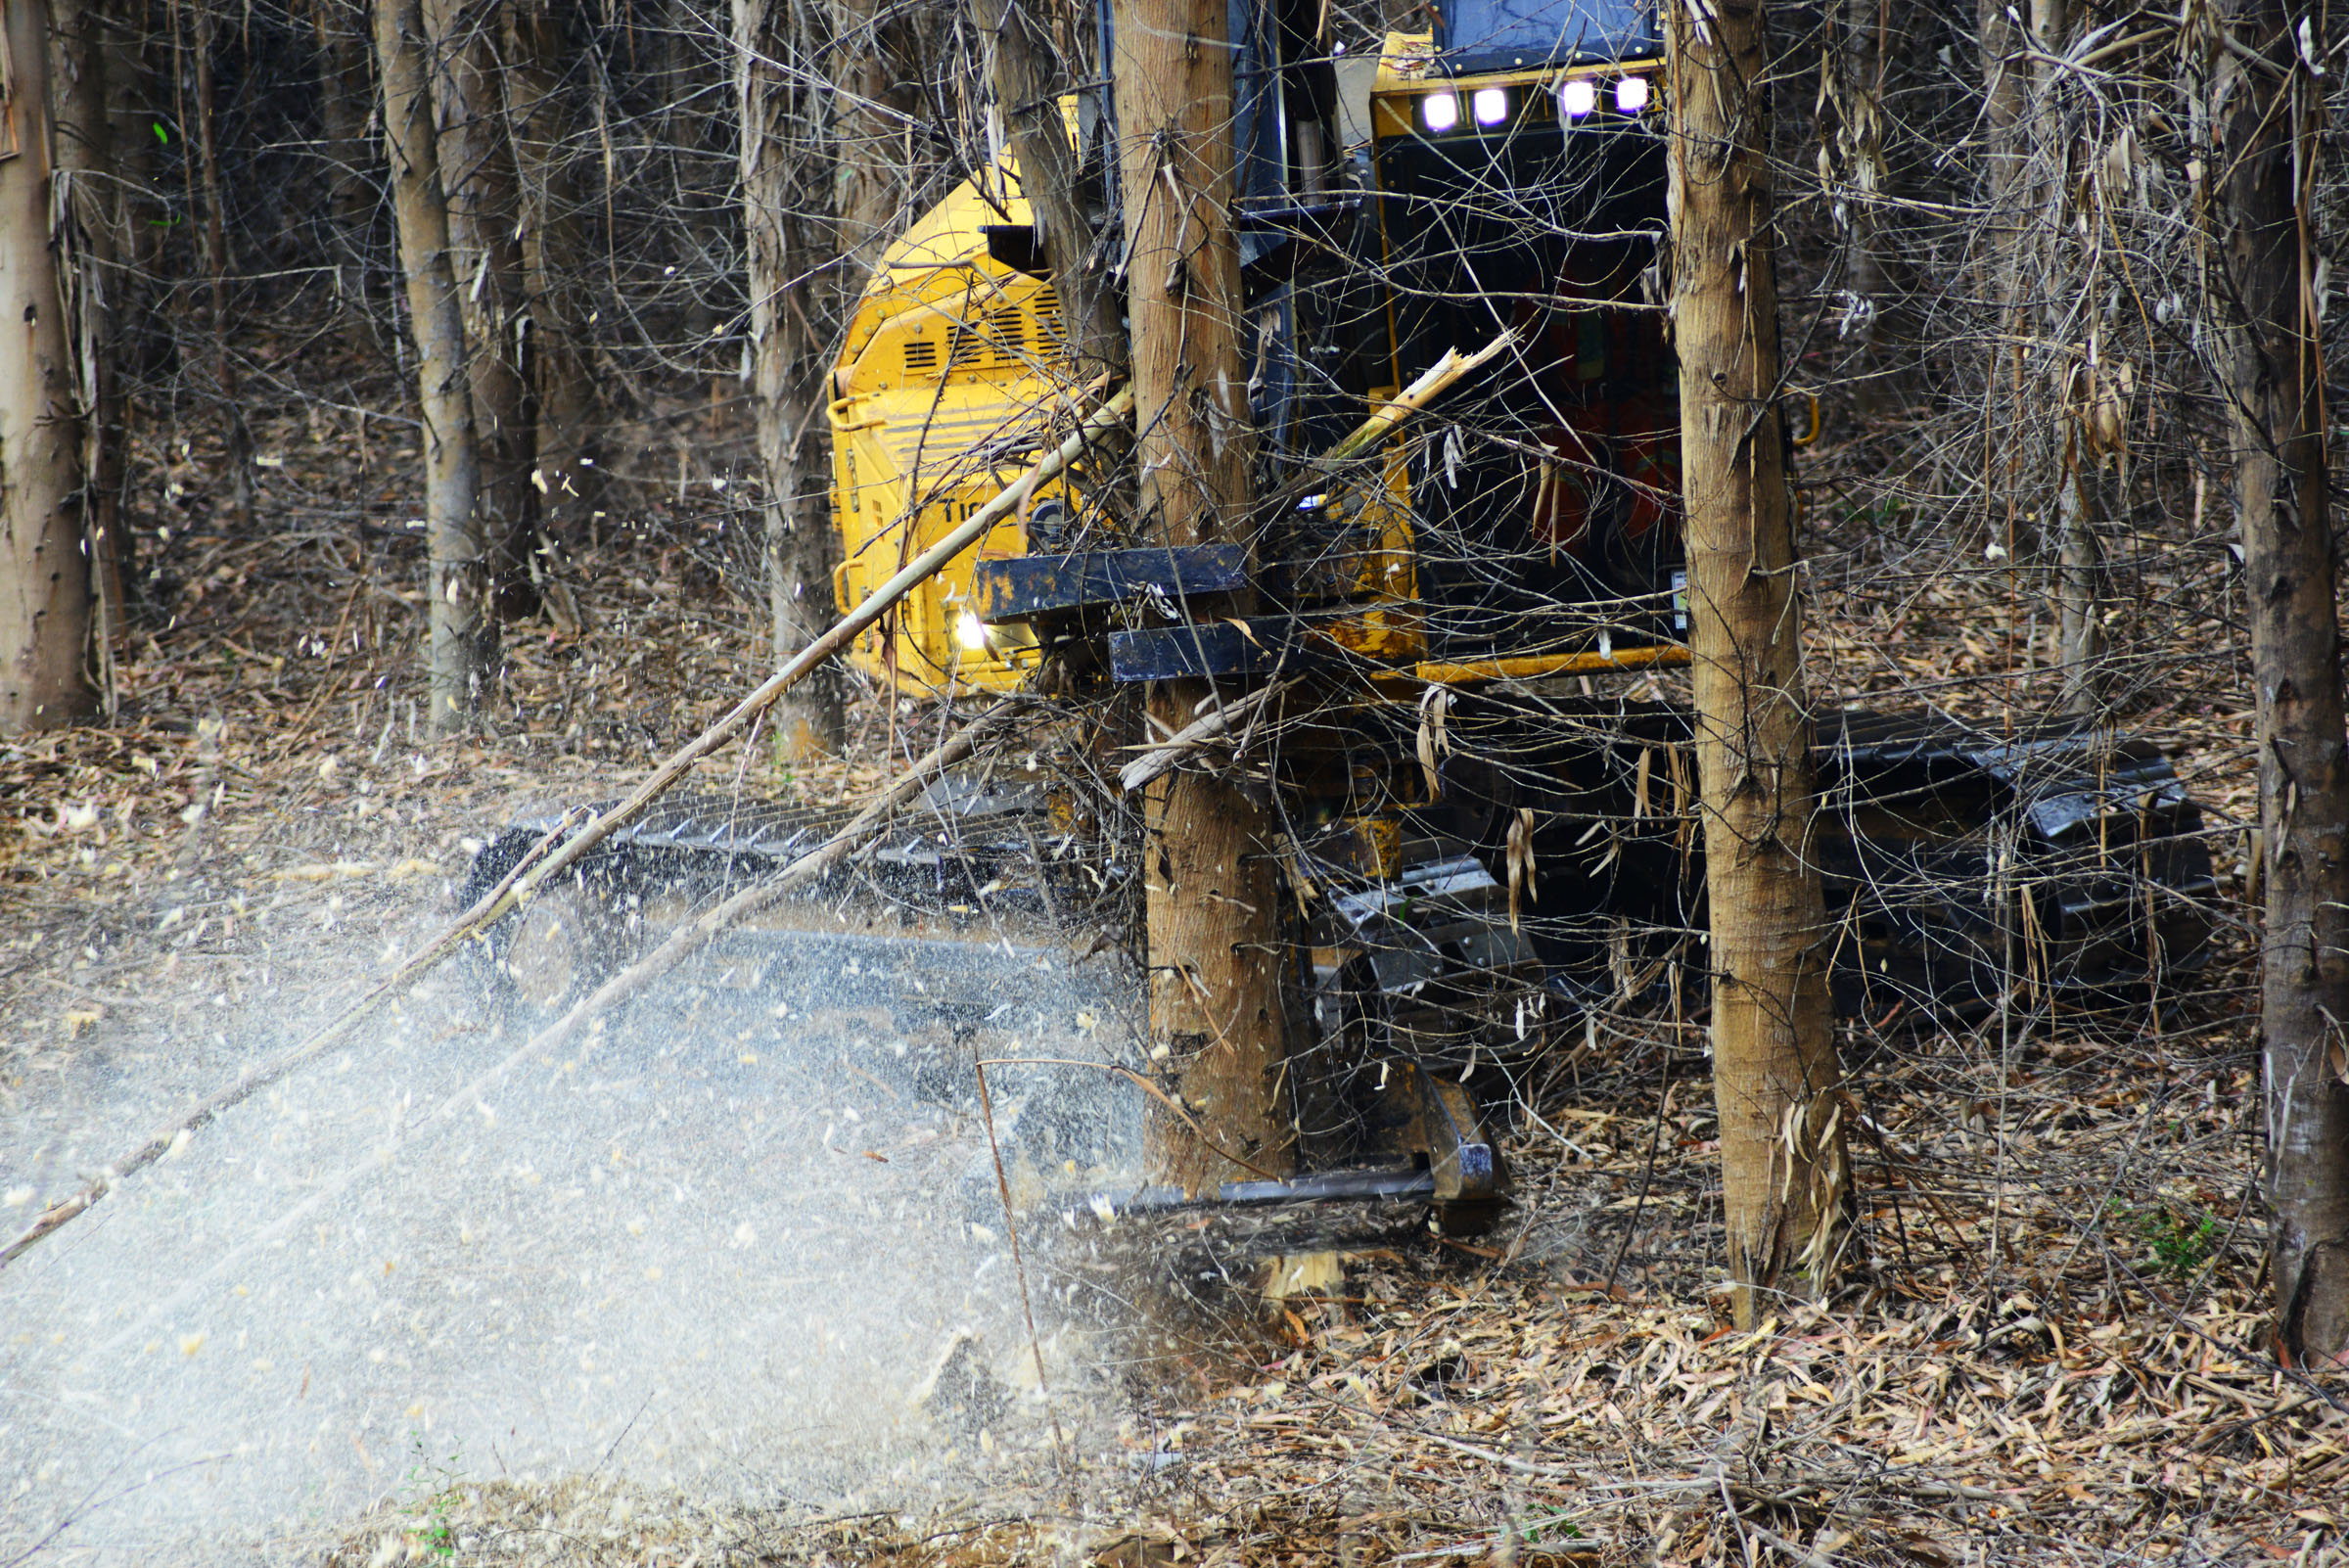 Saw dust flies as this track feller buncher saws through Eucalyptus